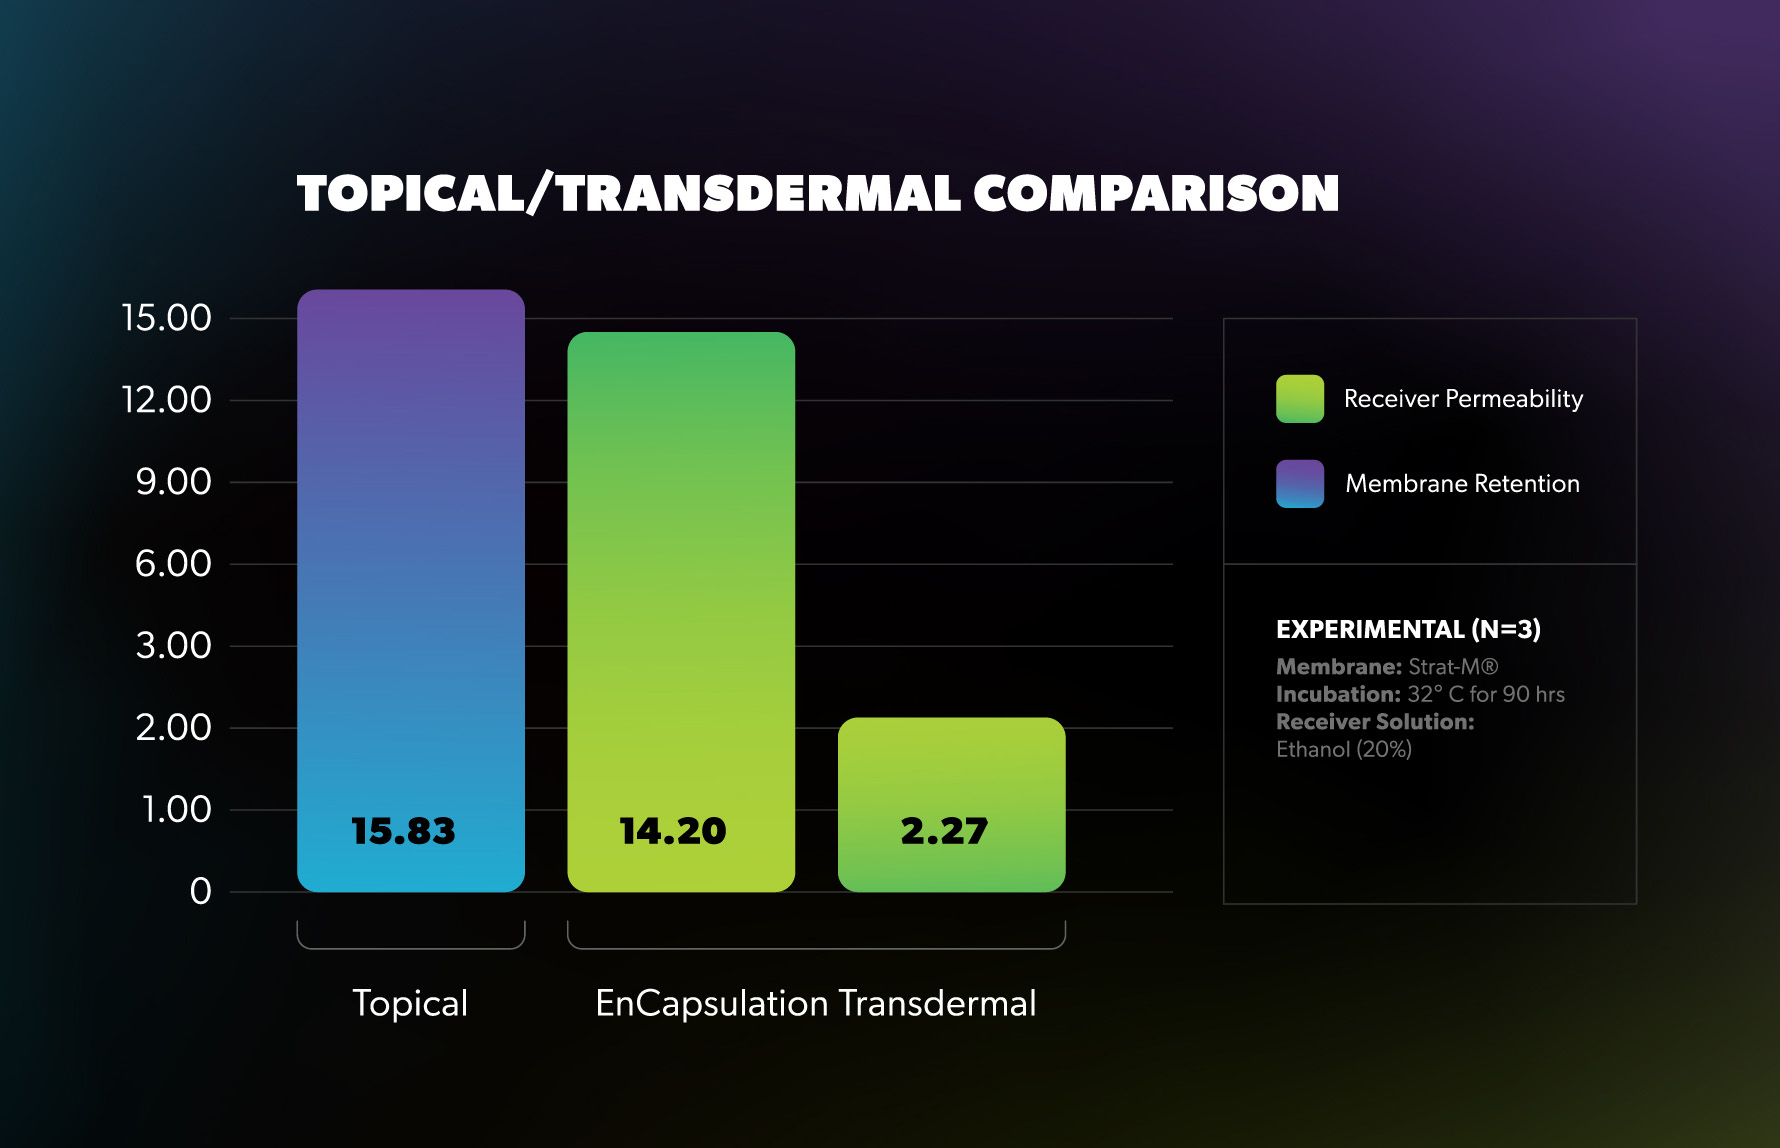 Topical/Transdermal comparison chart